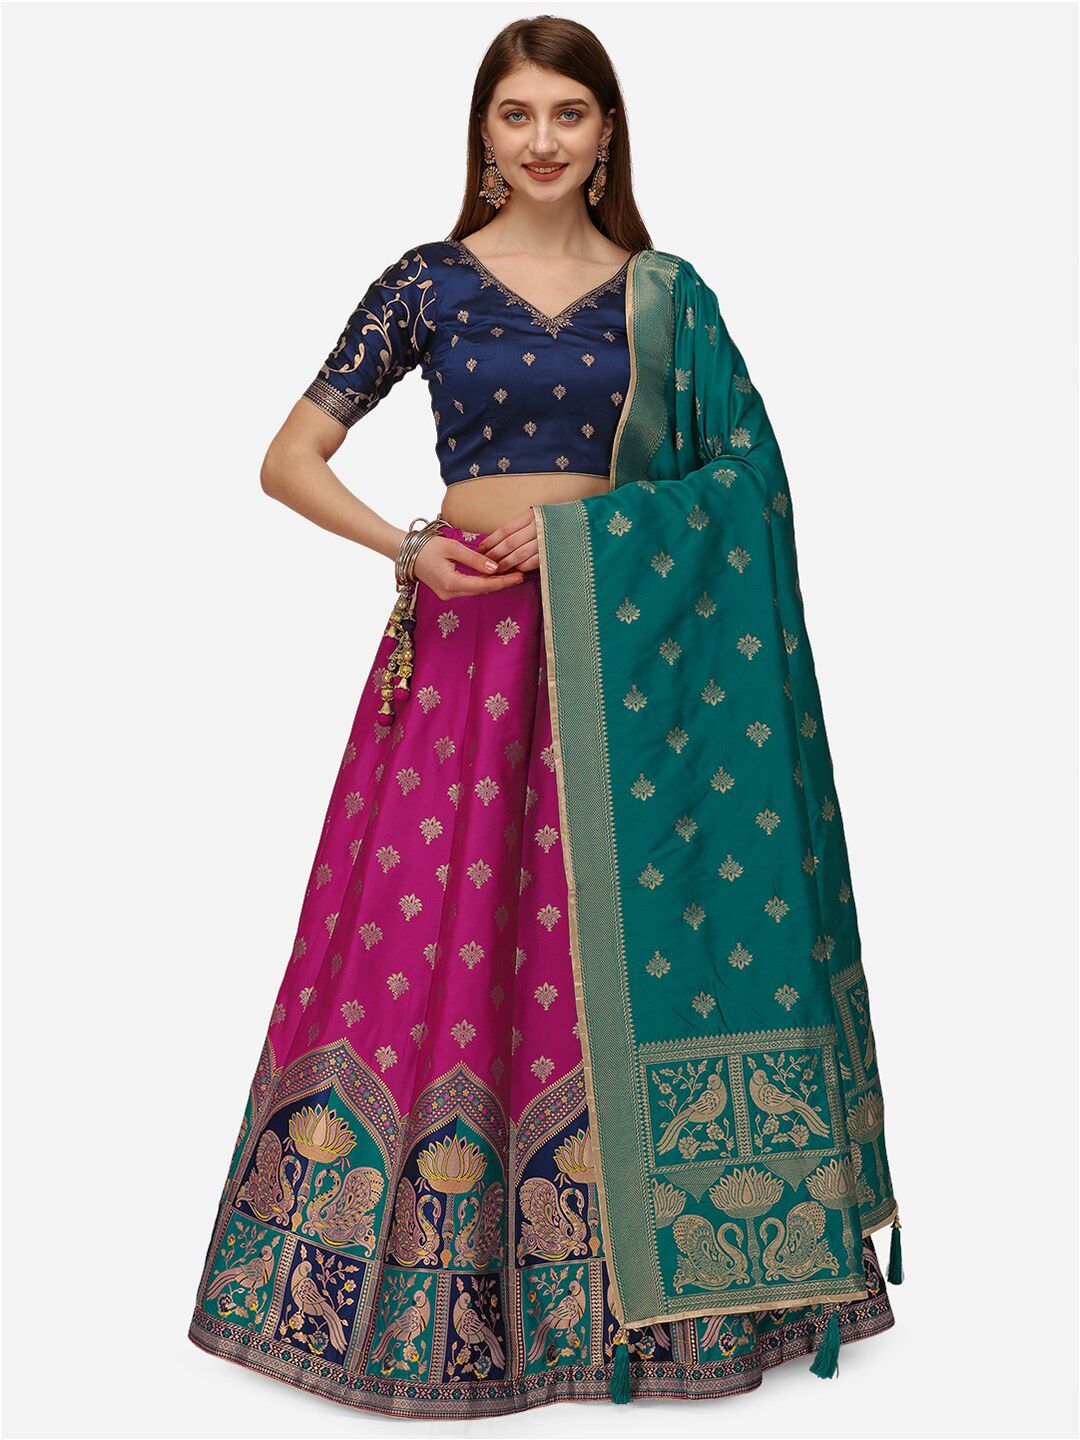 NAKKASHI Pink & Green Woven design  Semi-Stitched Lehenga & Unstitched Blouse With Dupatta Price in India